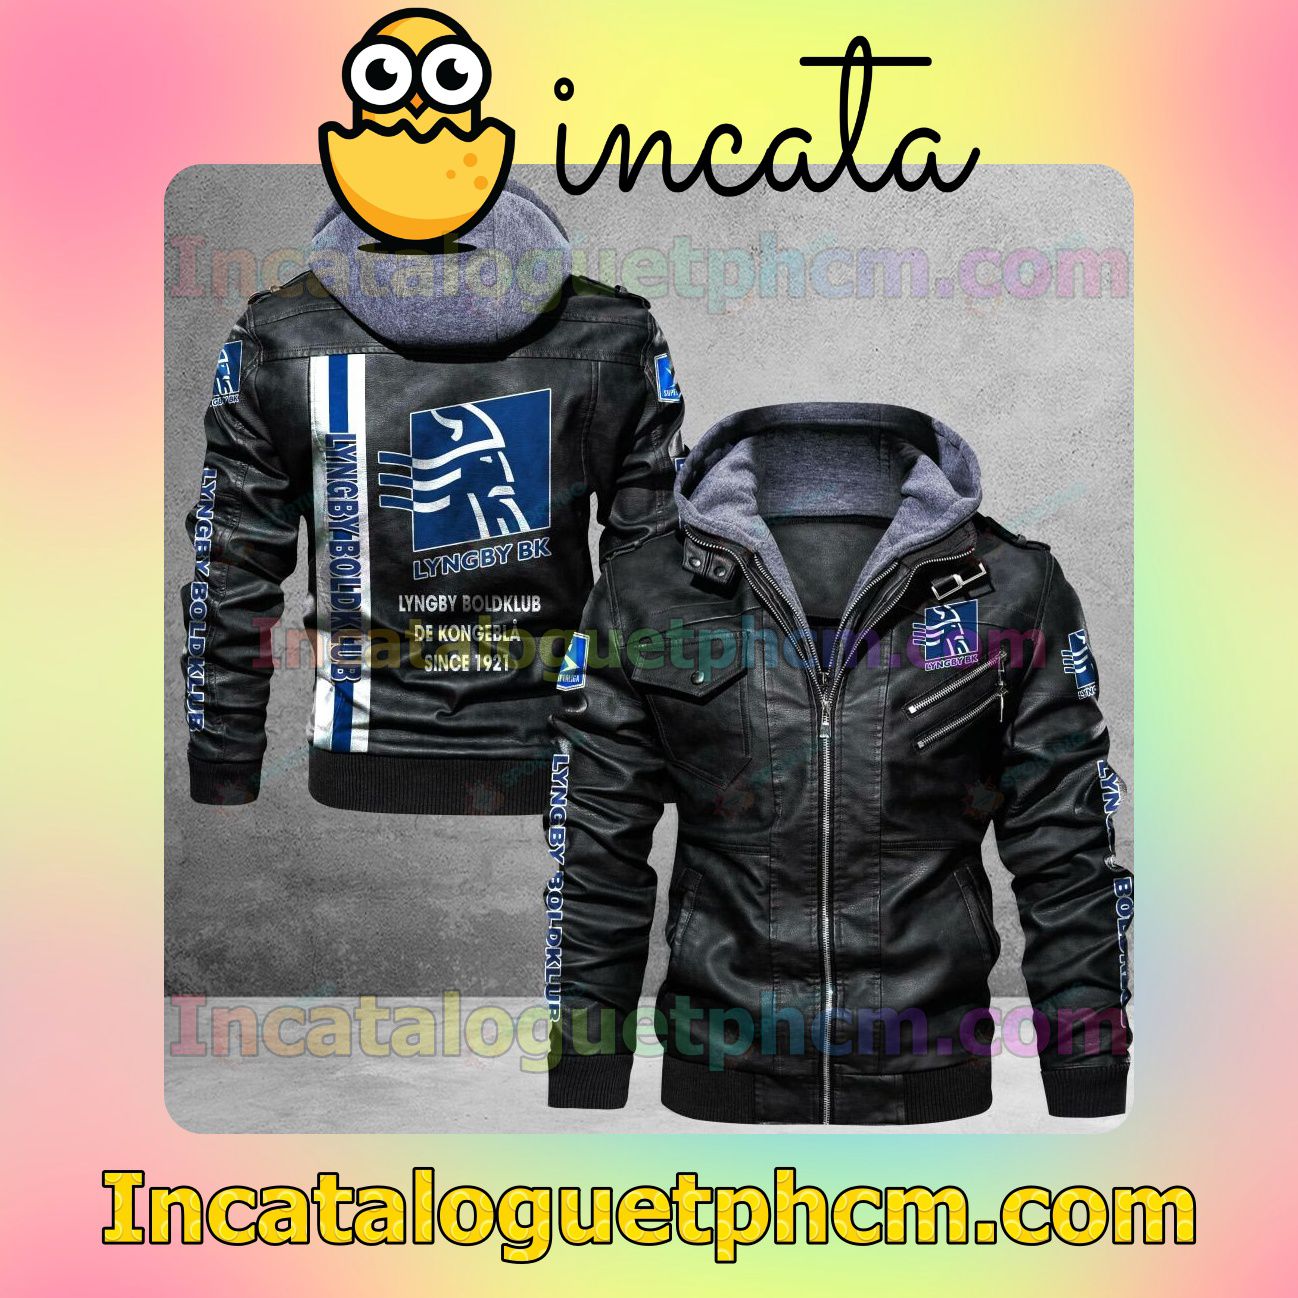 Lyngby Boldklub Brand Uniform Leather Jacket